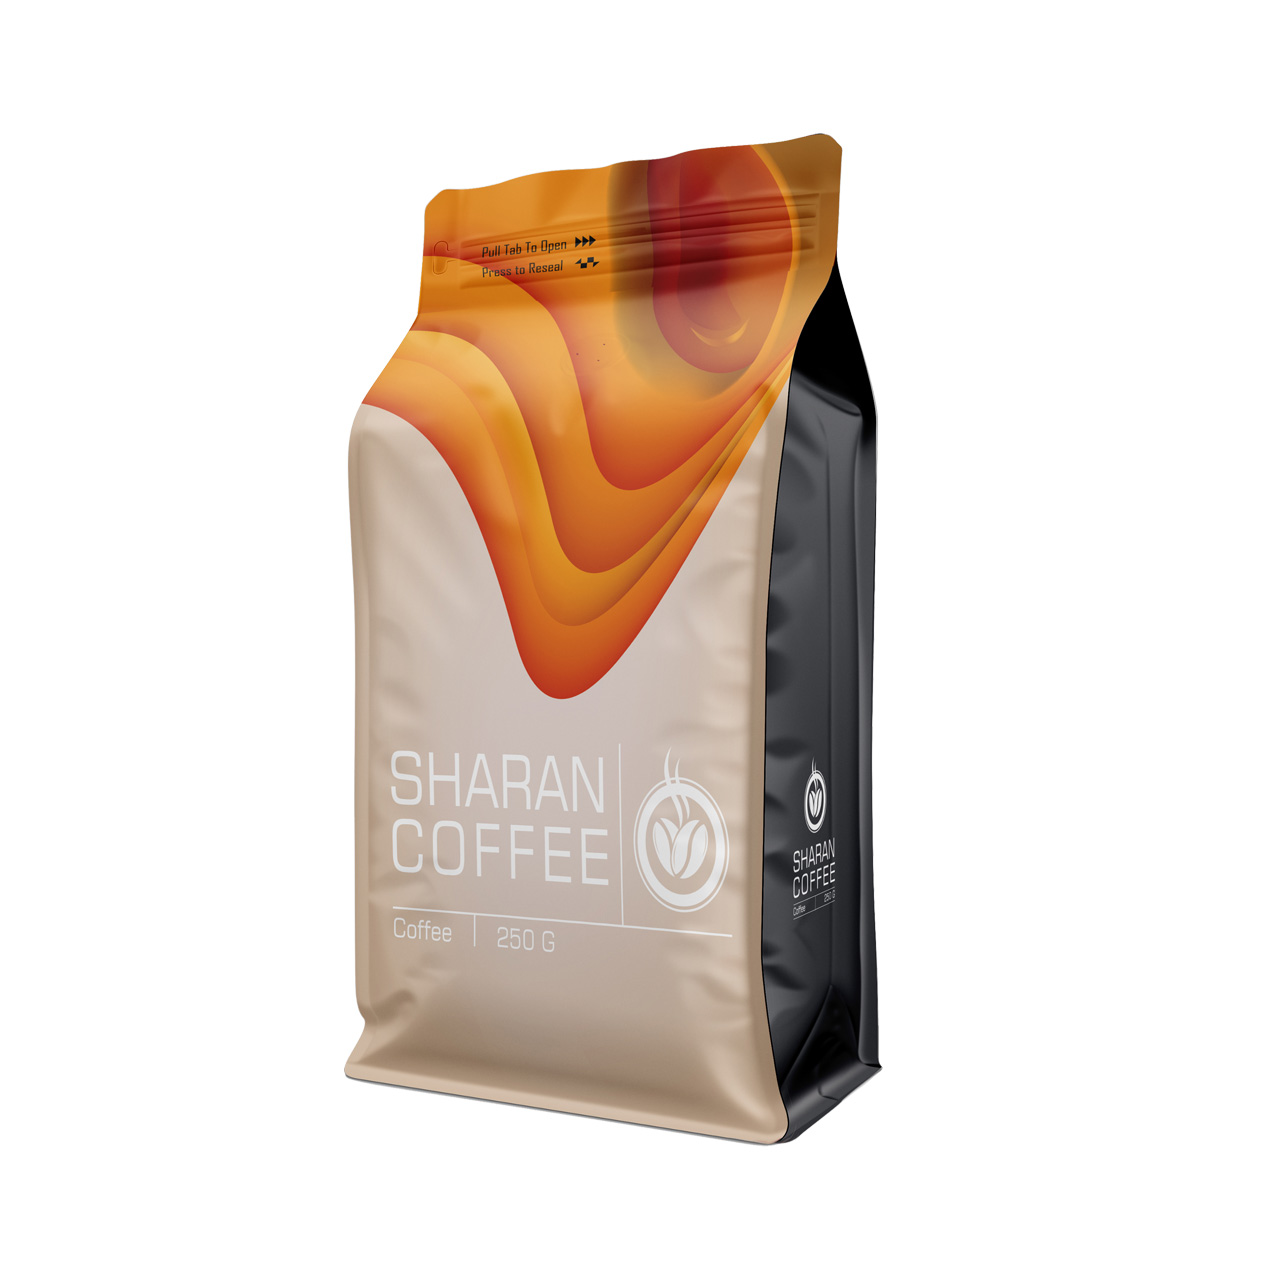 پودر قهوه اسپرسو میکس لاورز شاران - 250 گرم